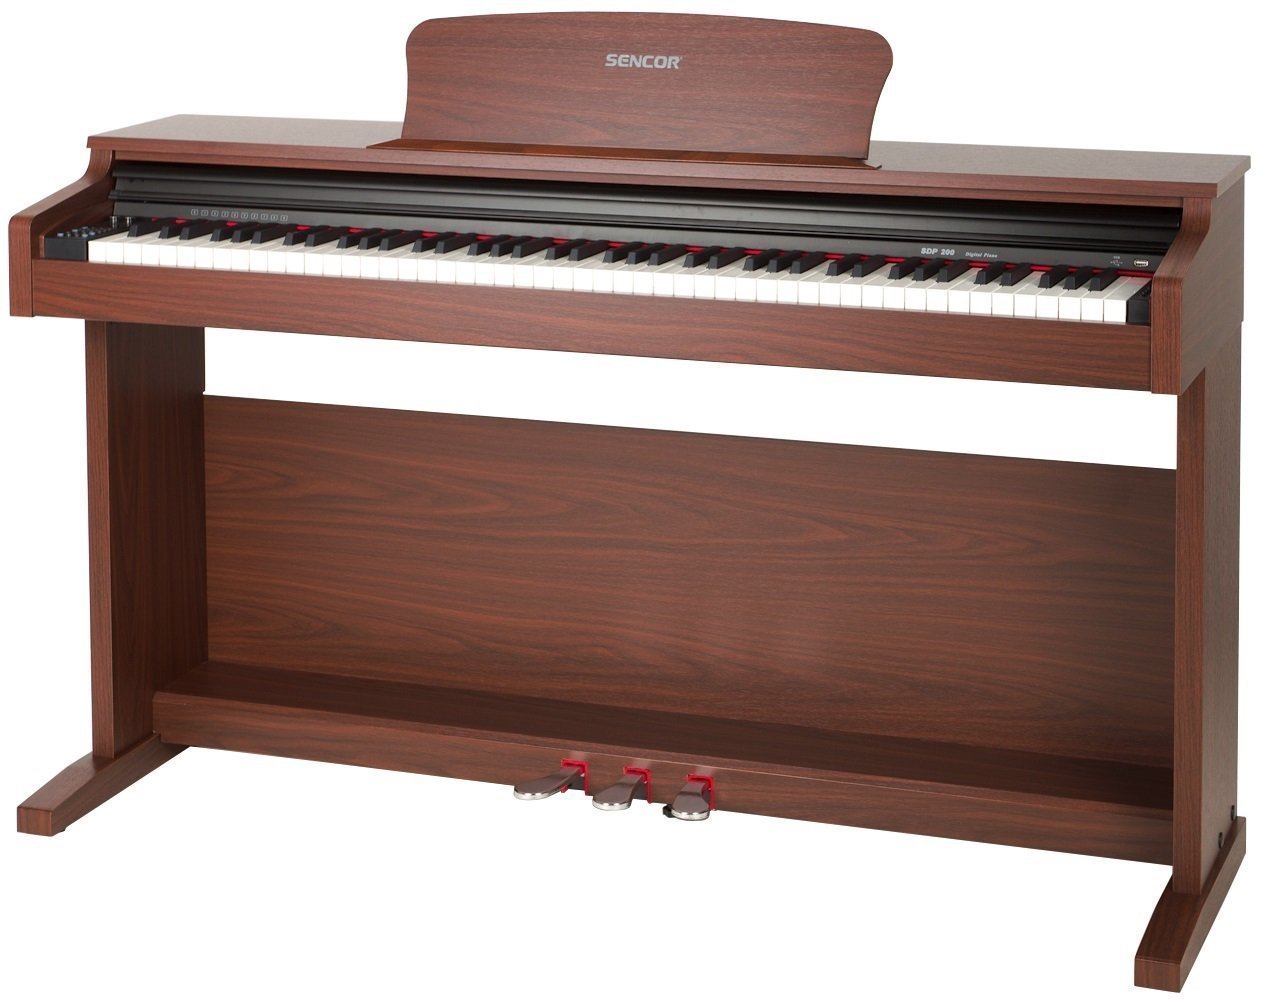 Digital Piano SENCOR SDP 200 Brown Digital Piano